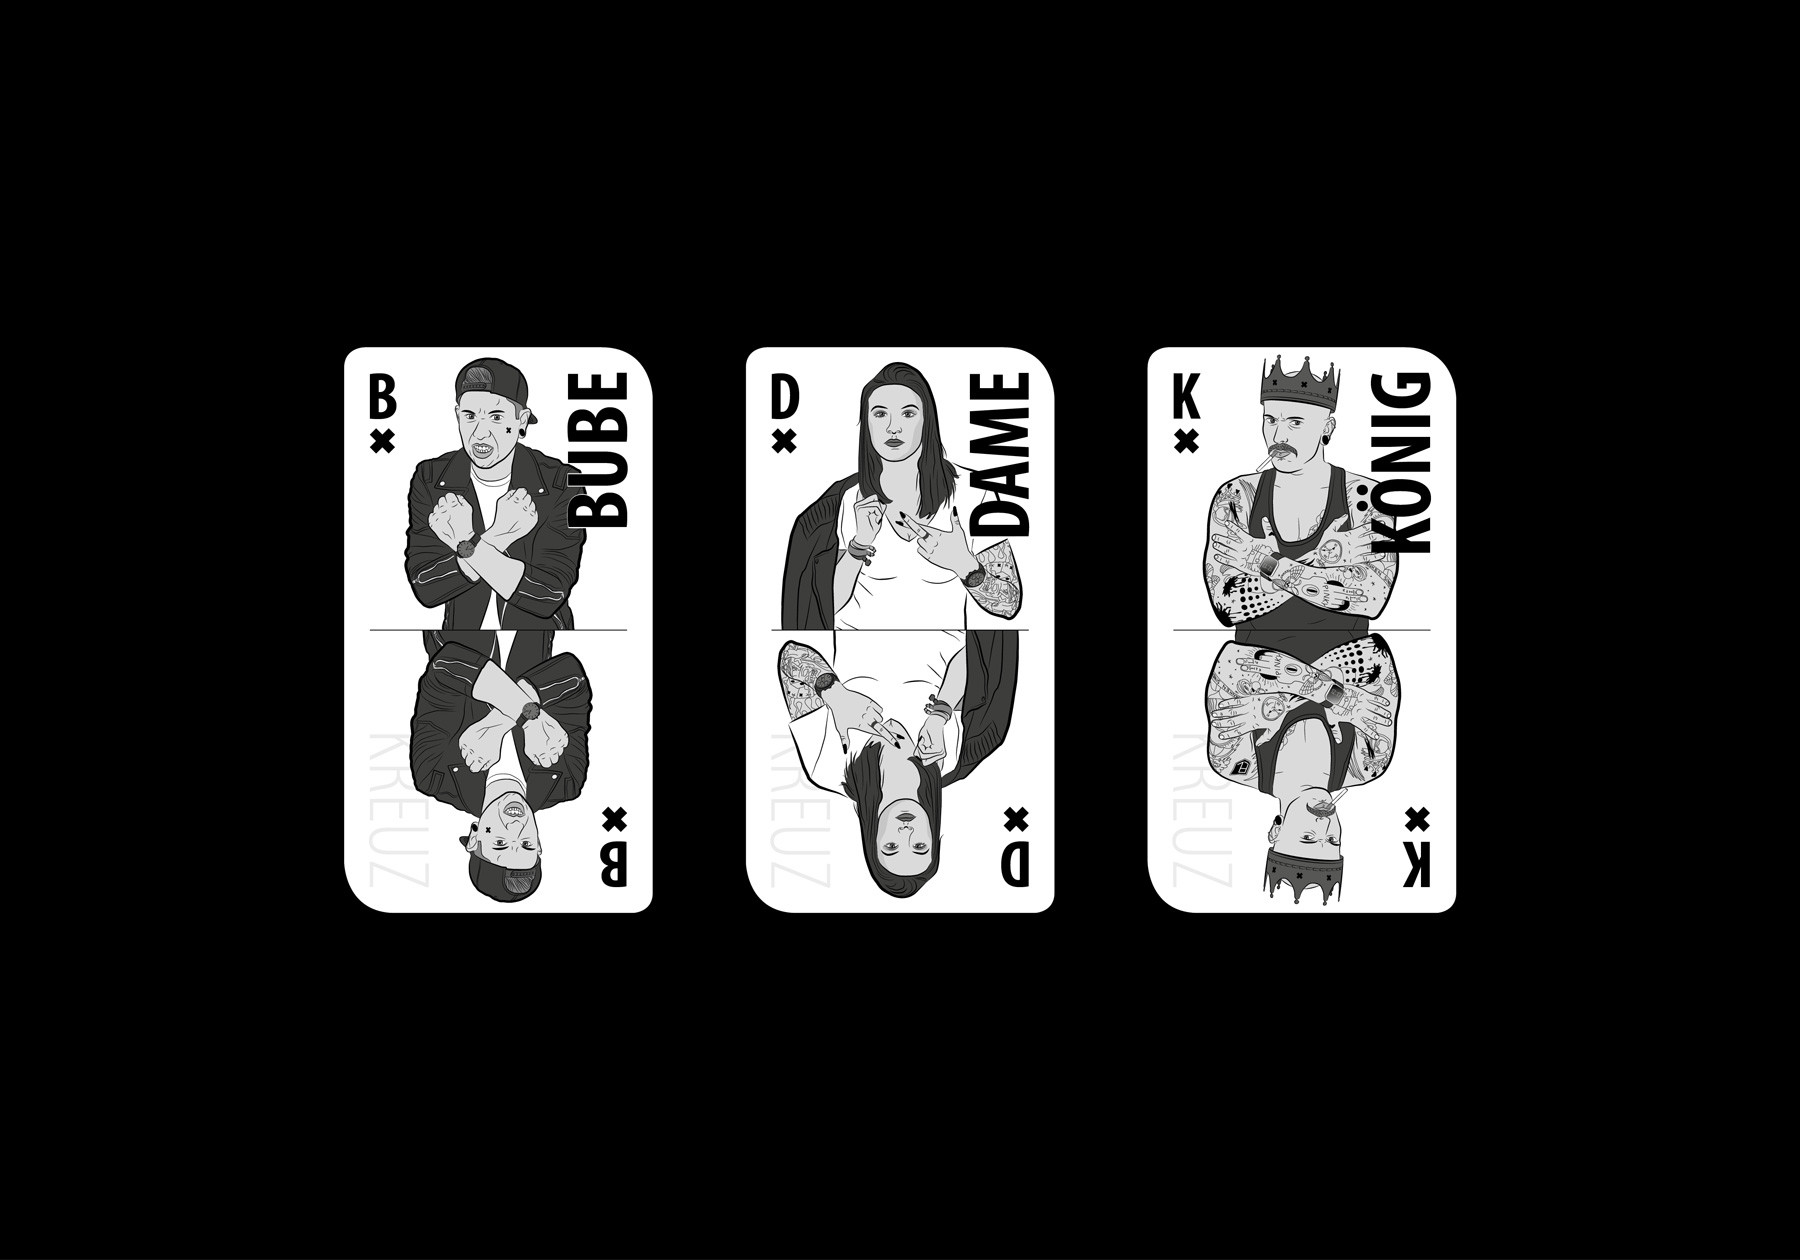 ELCARDO – 55 Moderne Spielkarten